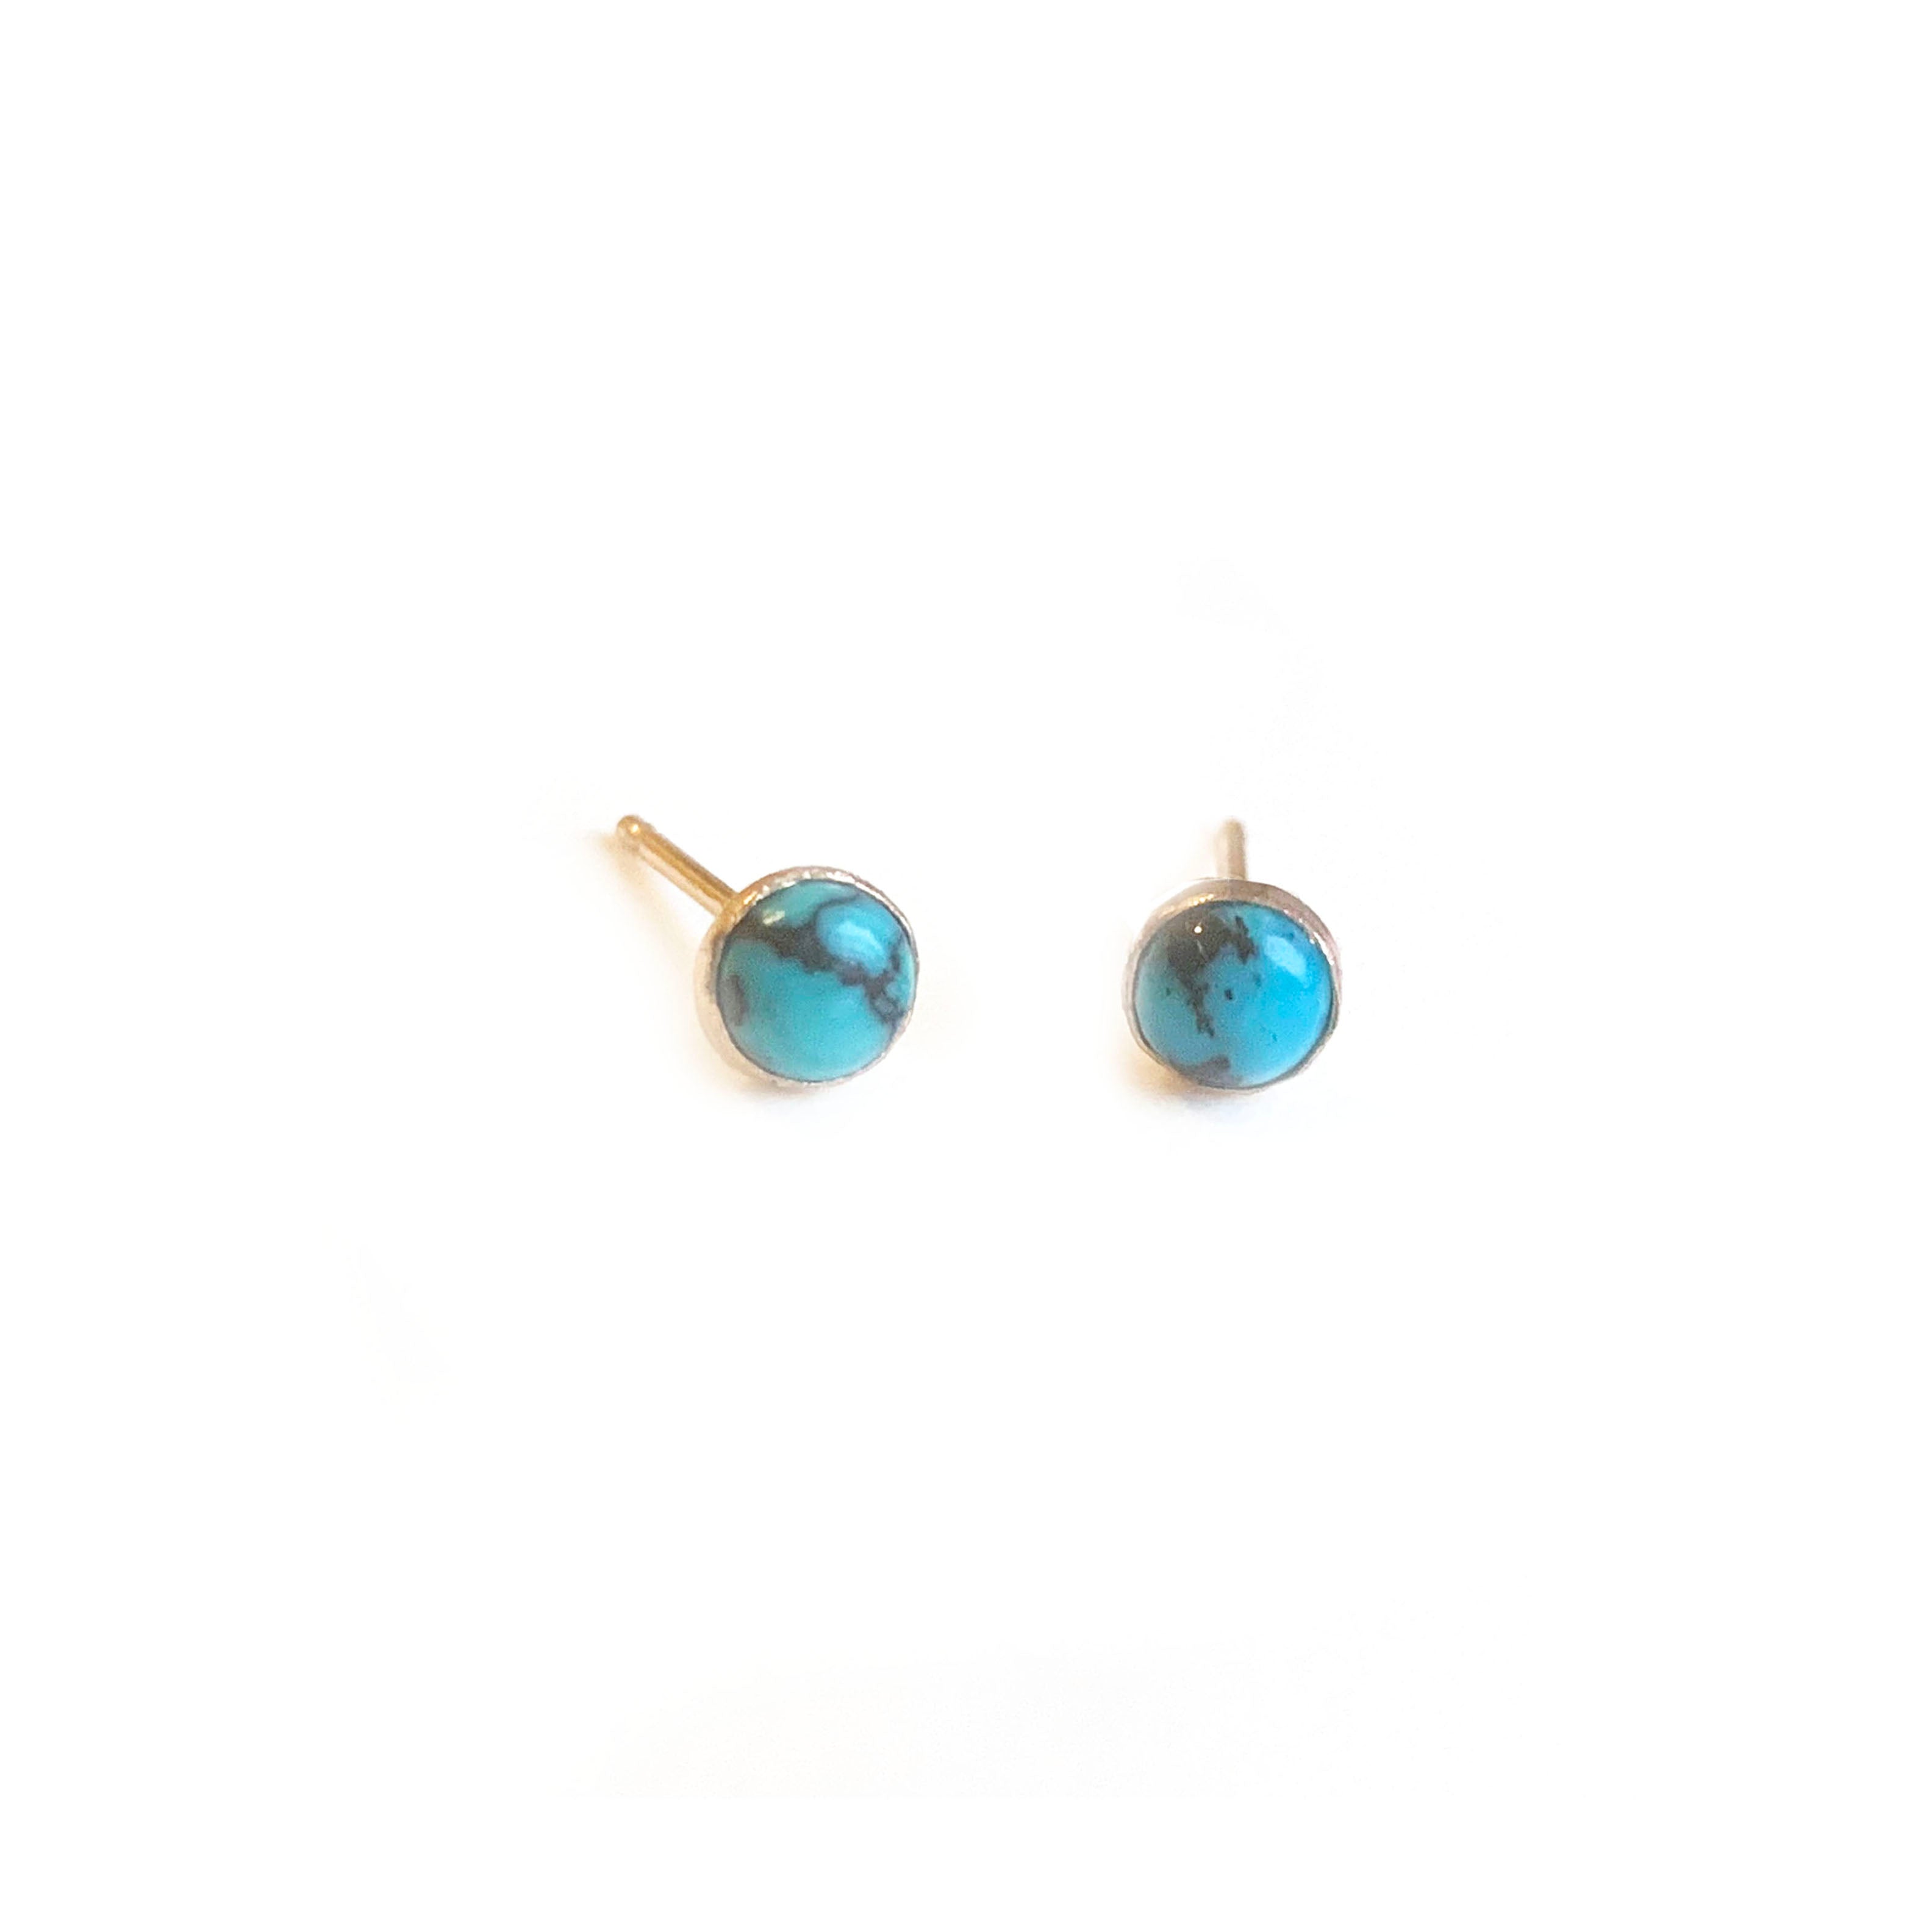 Tiny Gemstone Earrings - 14K Gold Filled + Turquoise